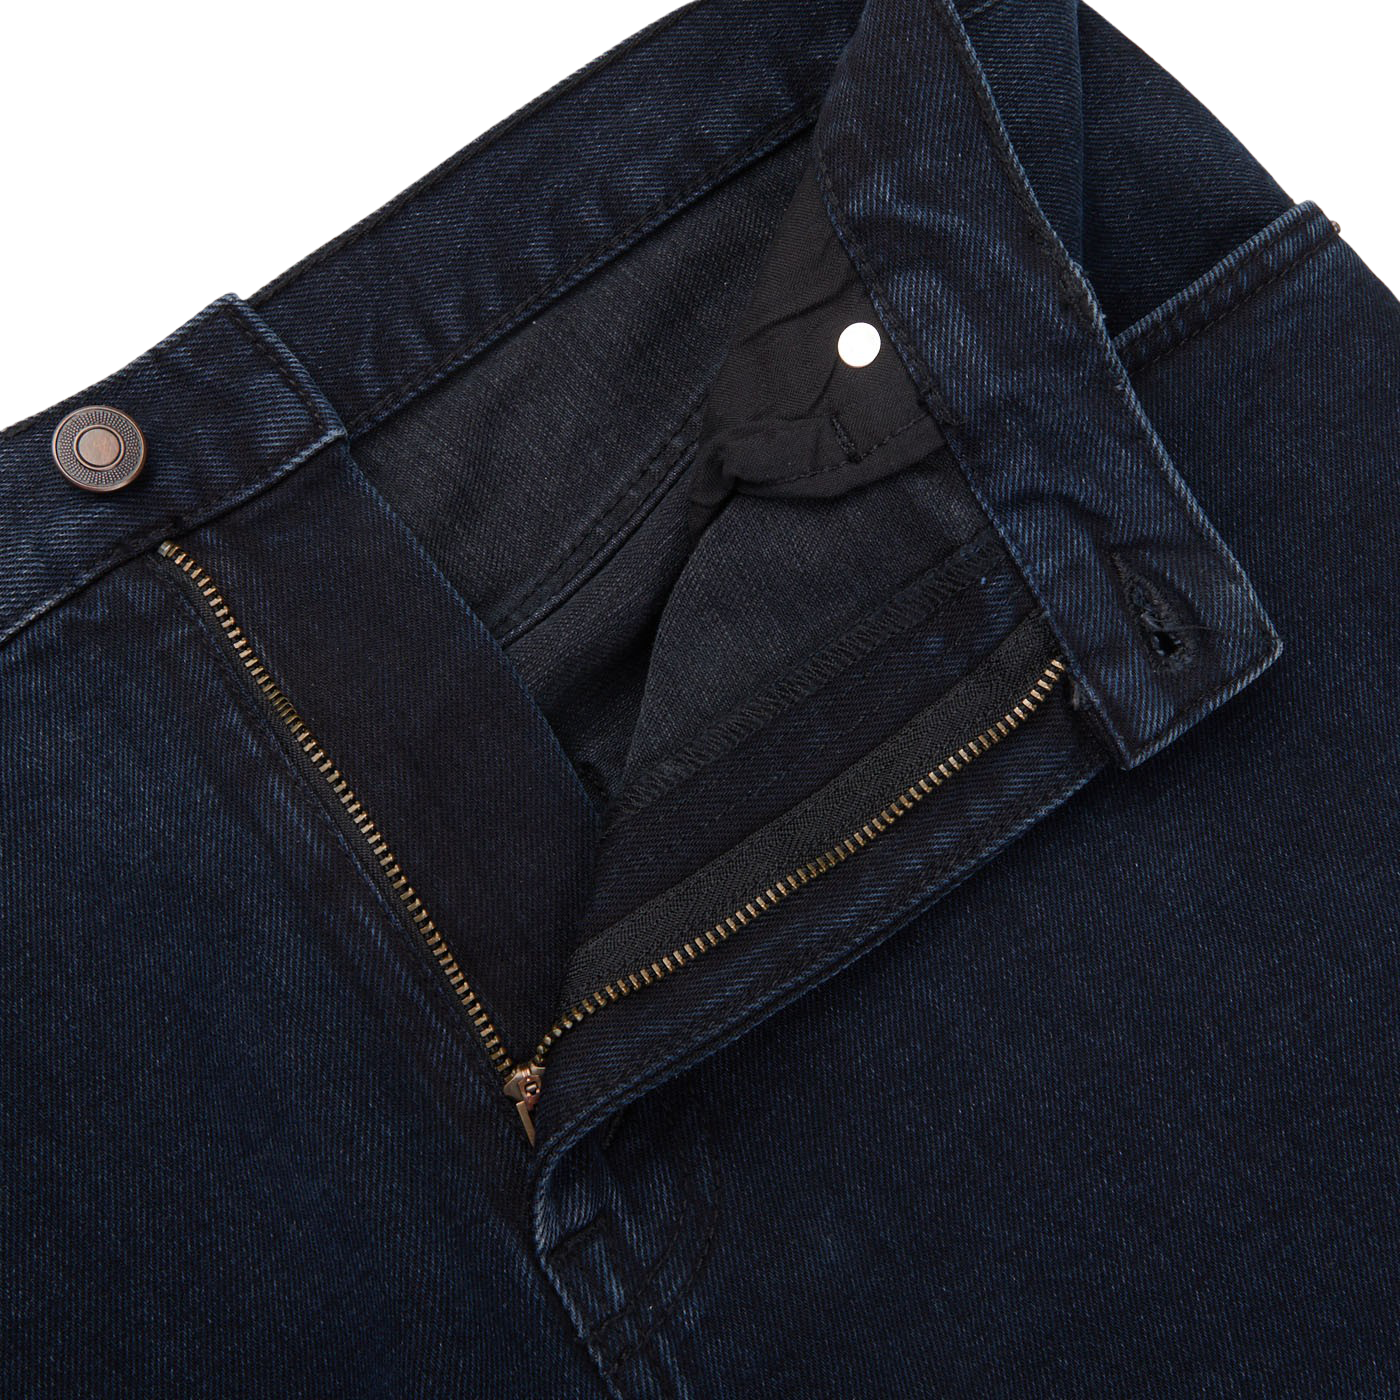 Jeanerica Blue Black Cotton TM005 Jeans Zipper